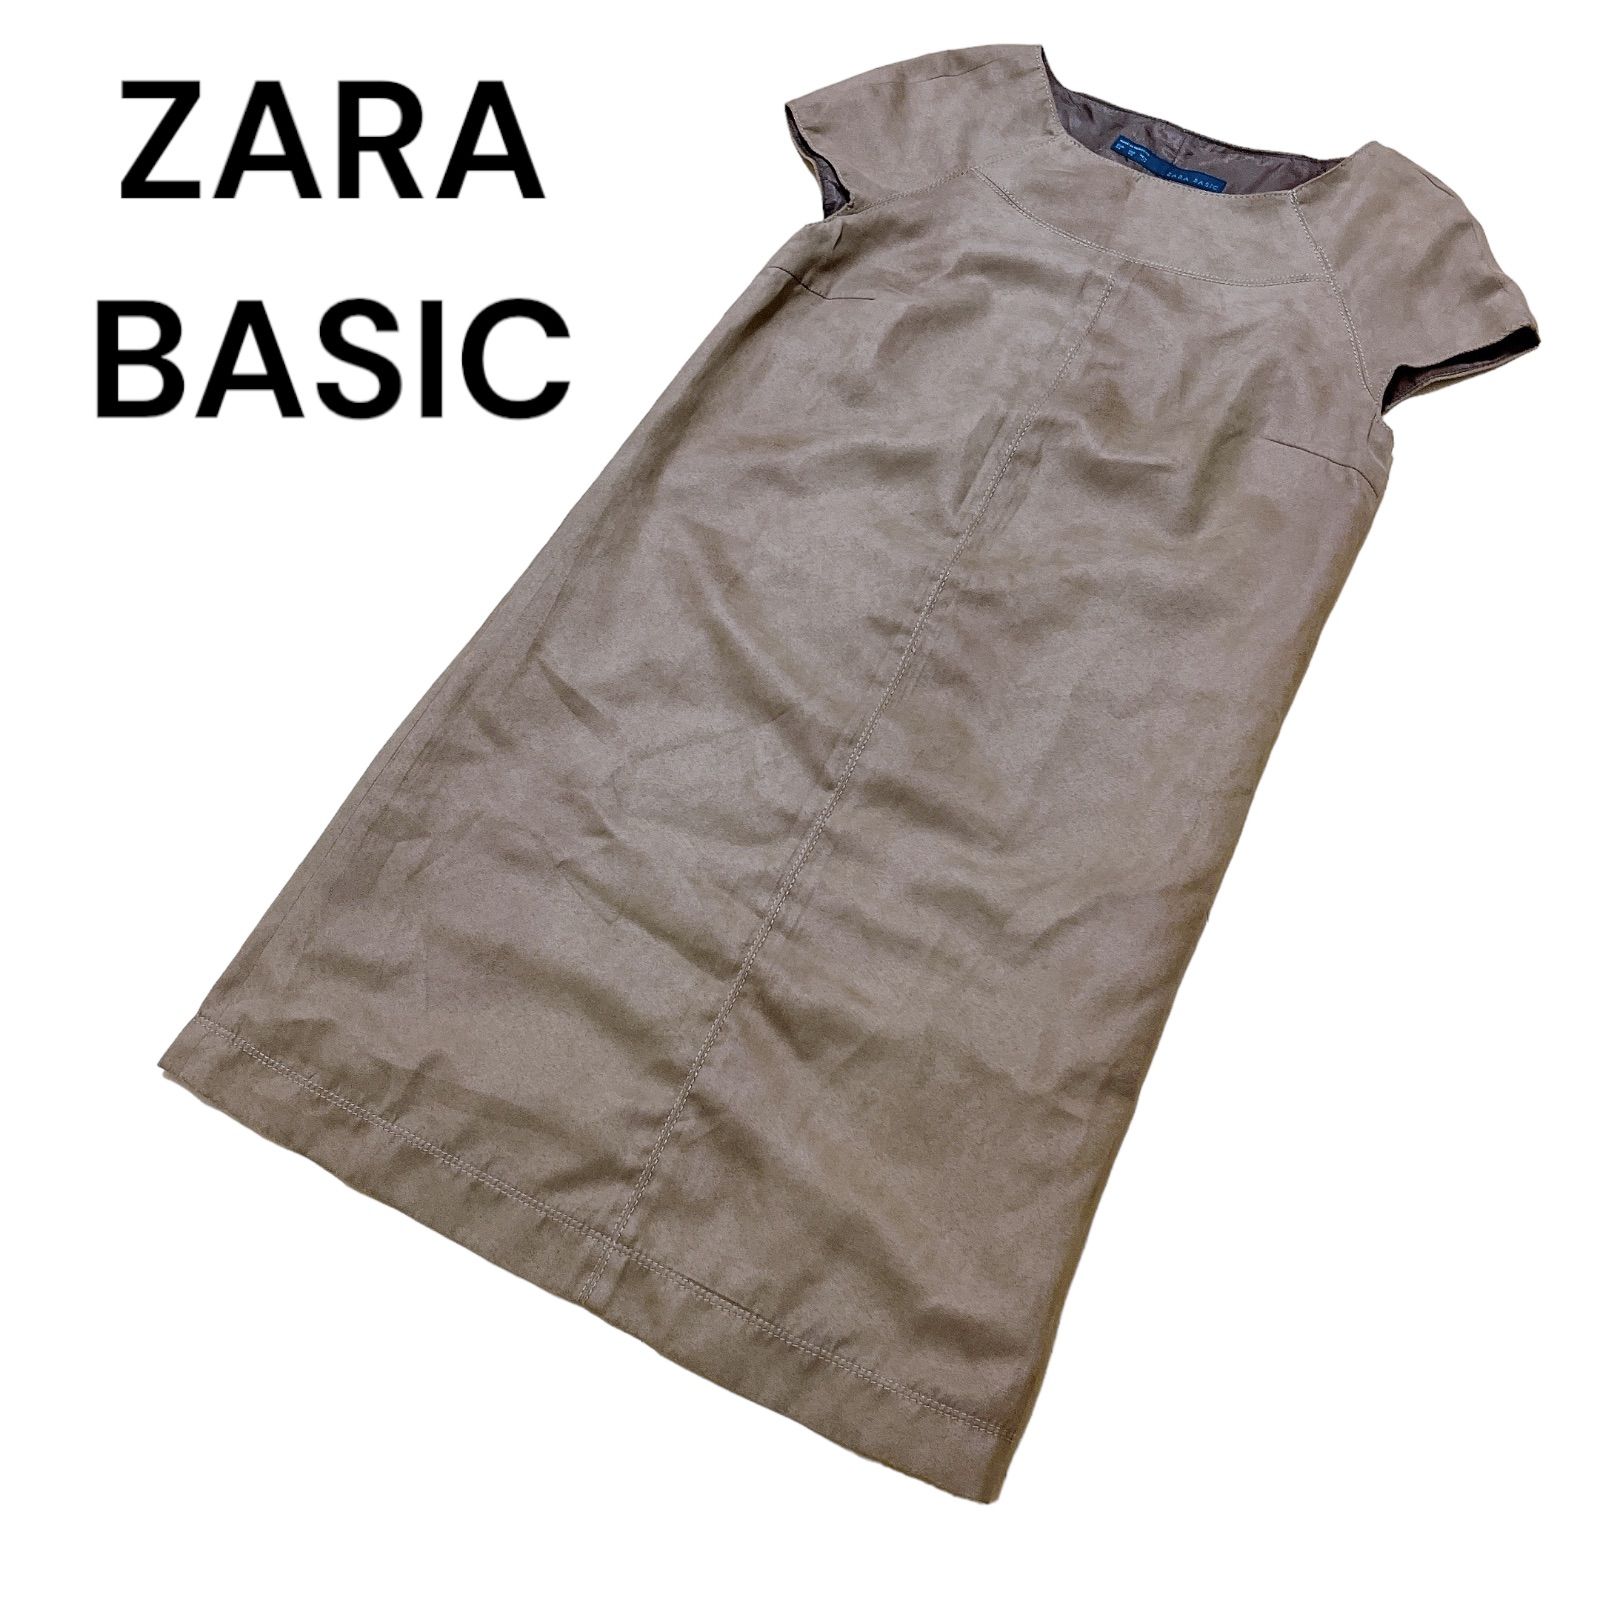 ZARA BASIC】ザラ ベーシック ワンピース ブラウン 茶色 - メルカリ